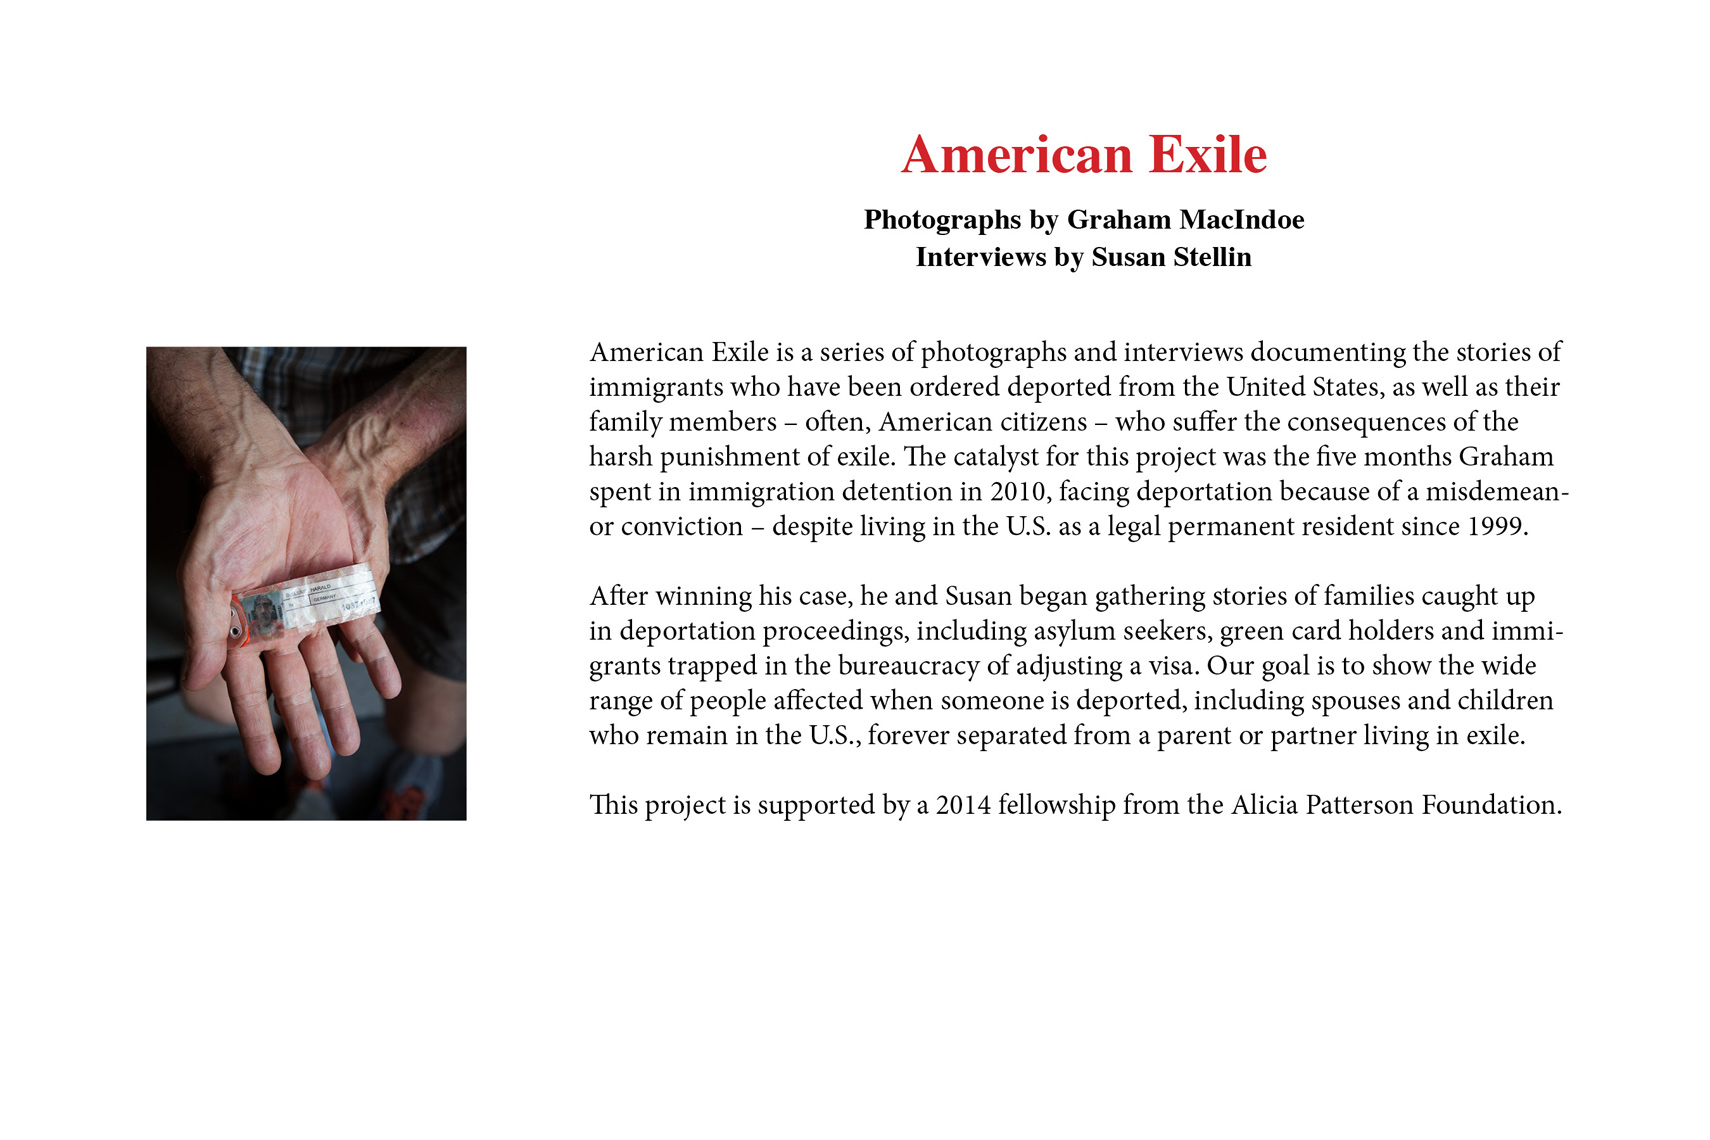 American Exile - Deportation